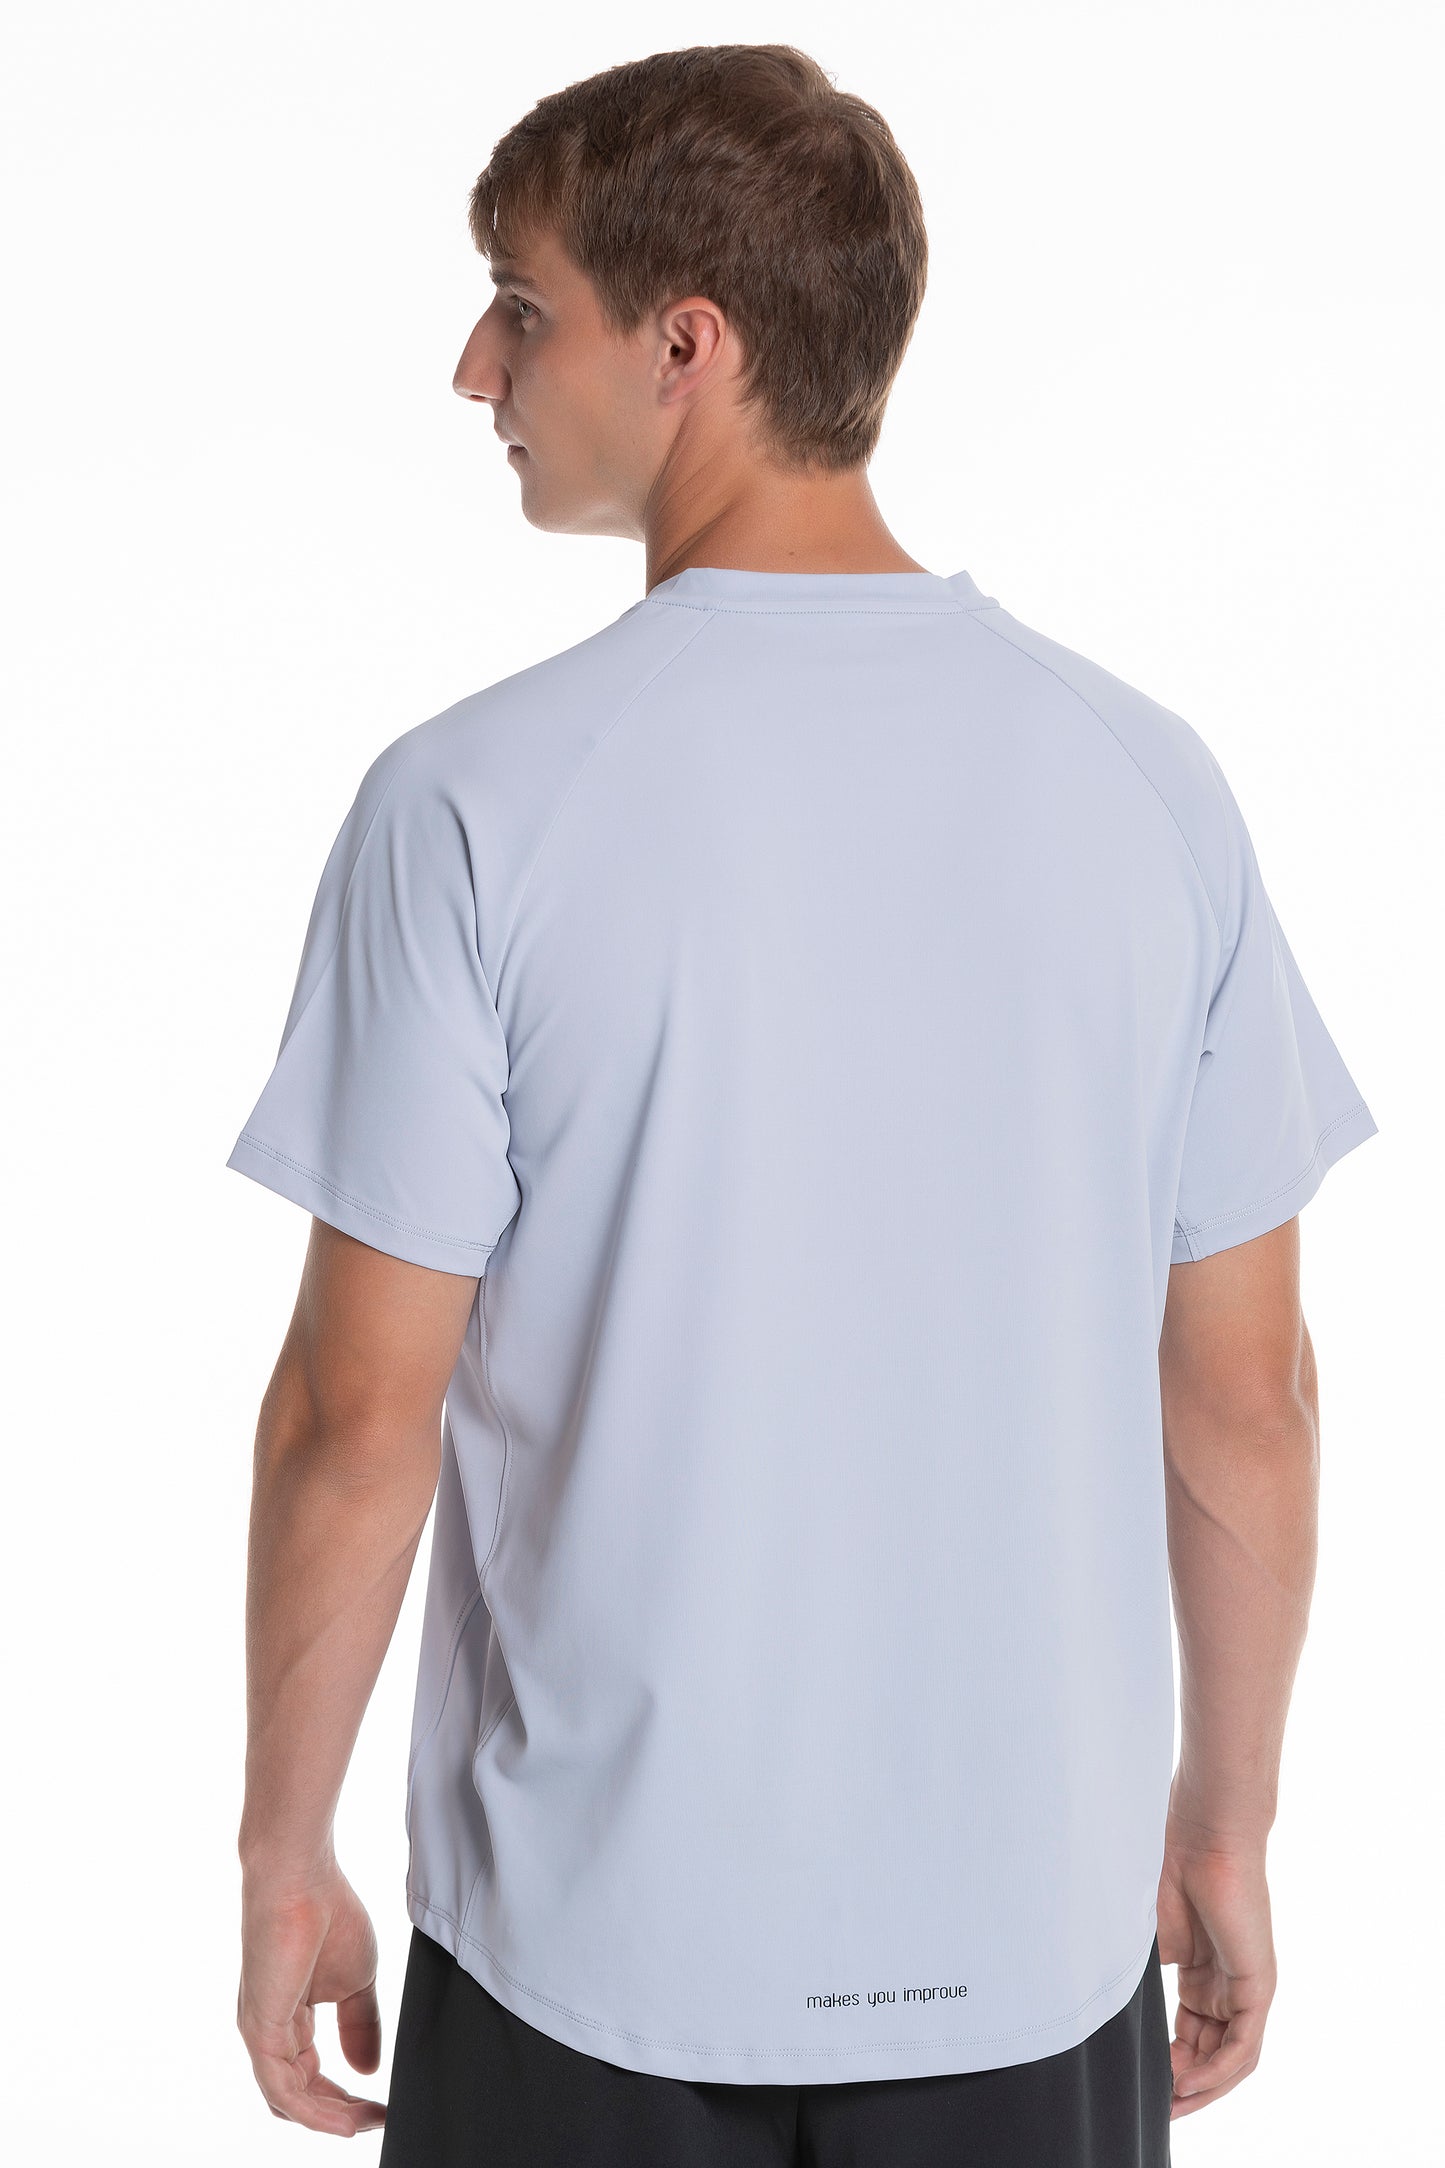 MEN T-Shirt PRO grey